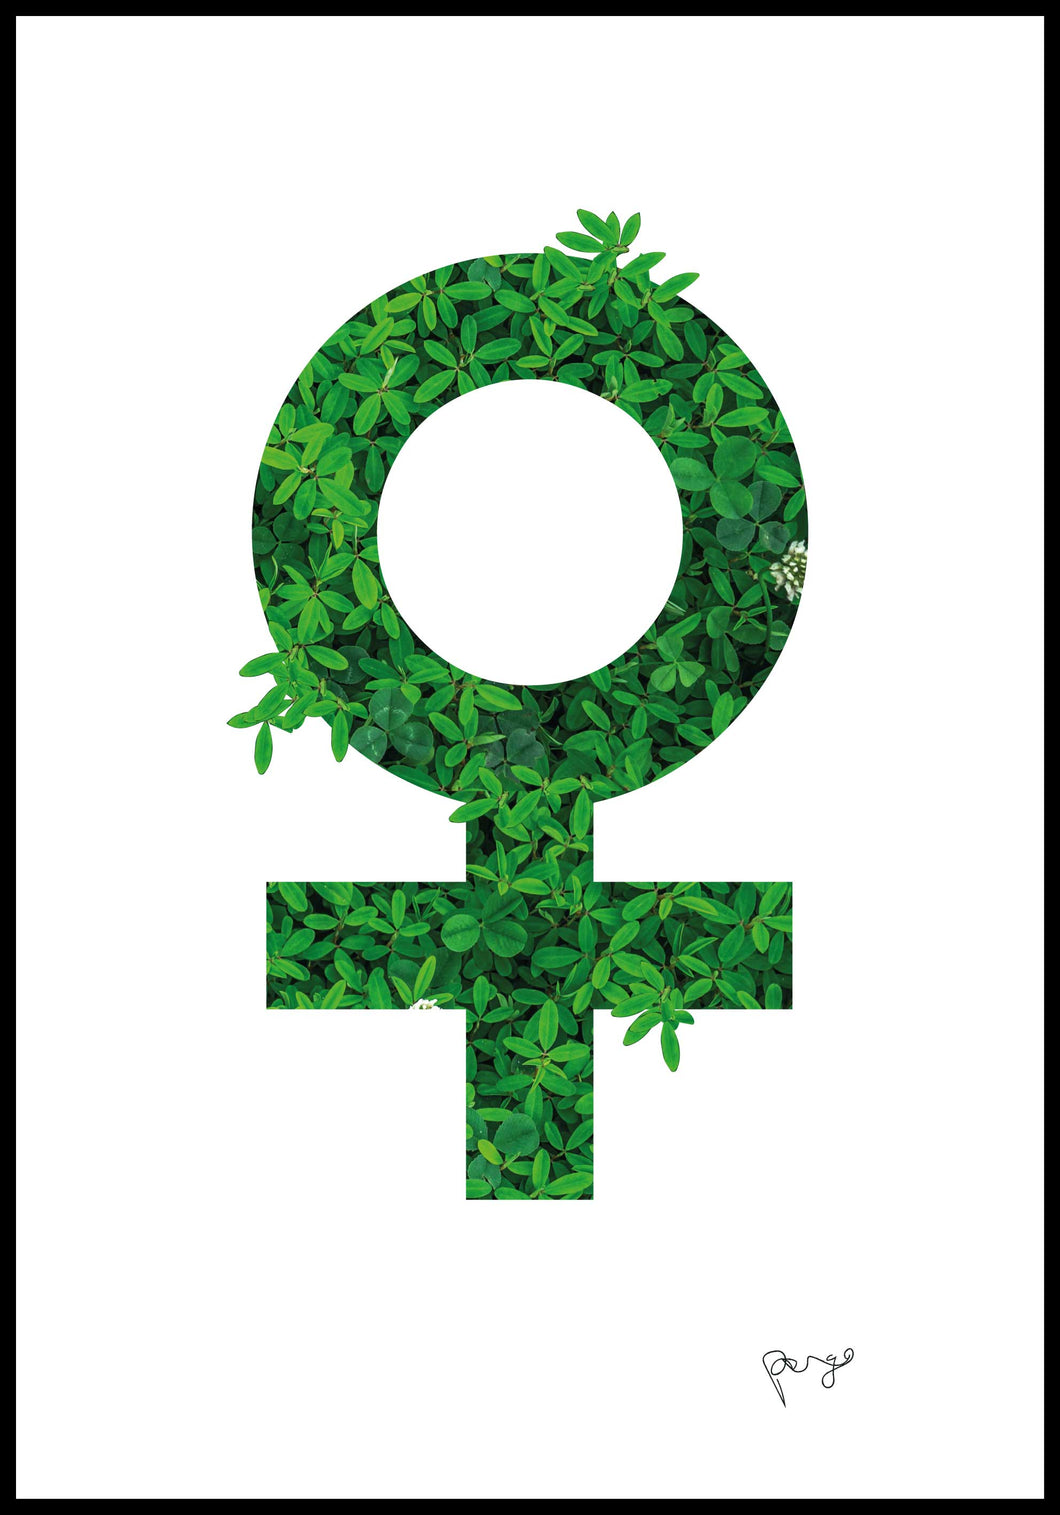 Female symbol in green leaves